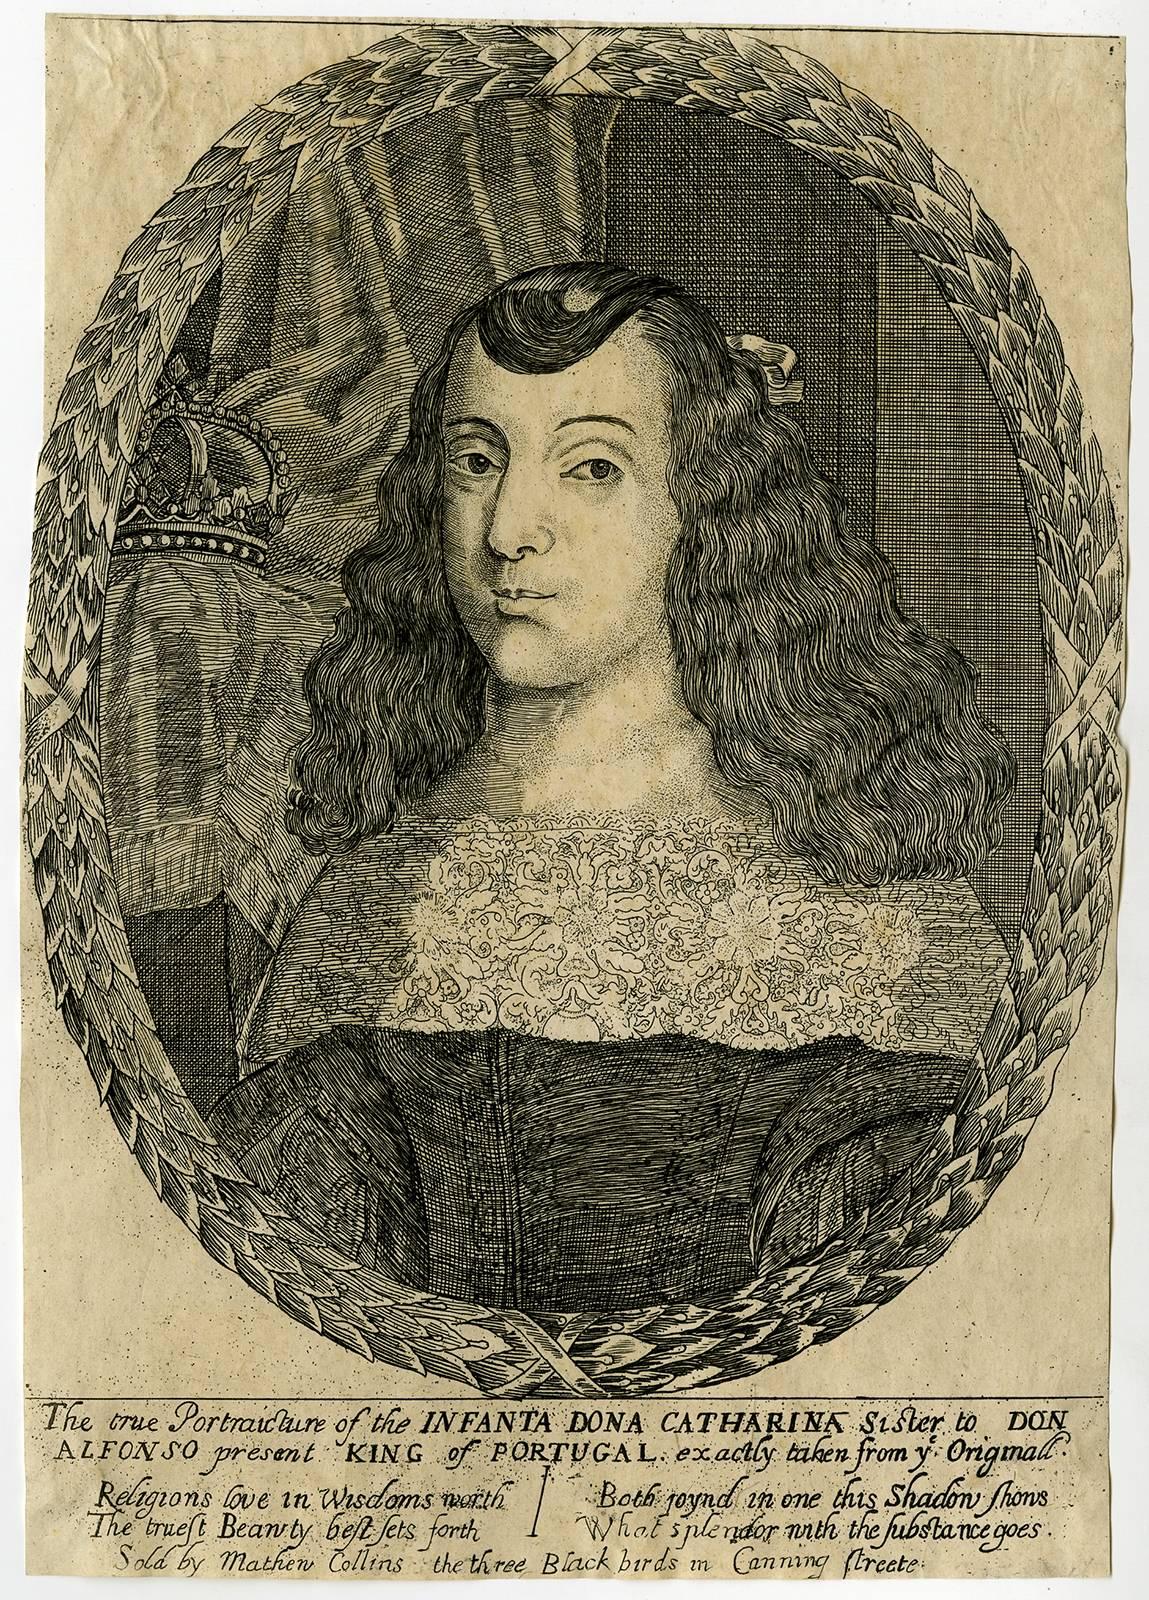 Matthew Collins Portrait Print - The true portraicture of the infanta dona Catharina [..].